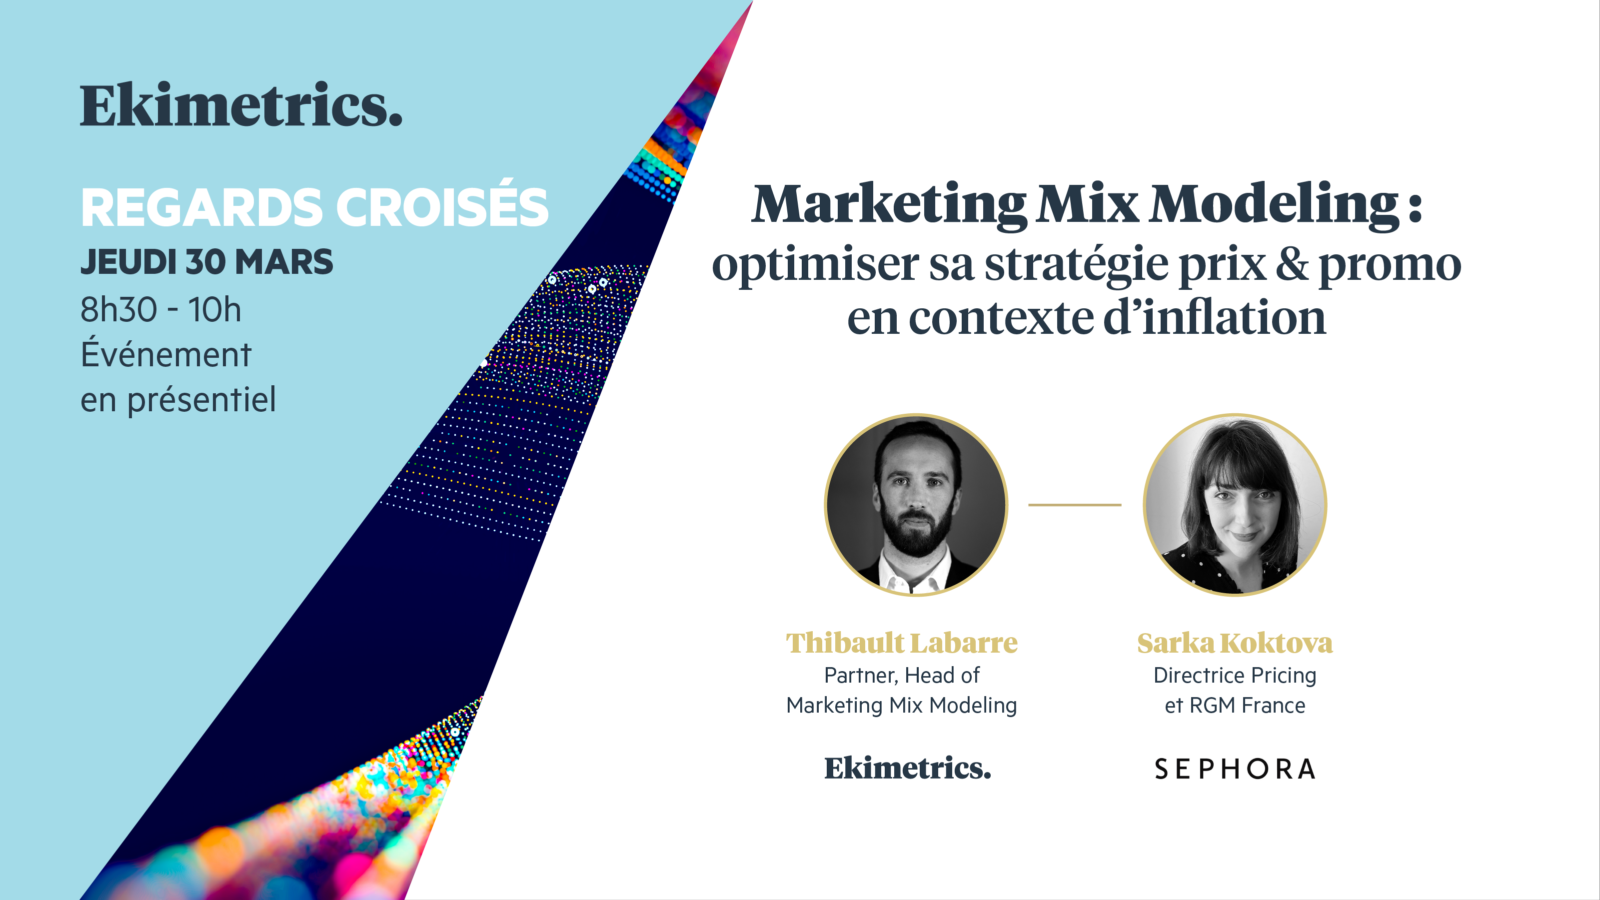 Marketing Mix Modeling : optimiser sa stratégie prix & promo en contexte d’inflation